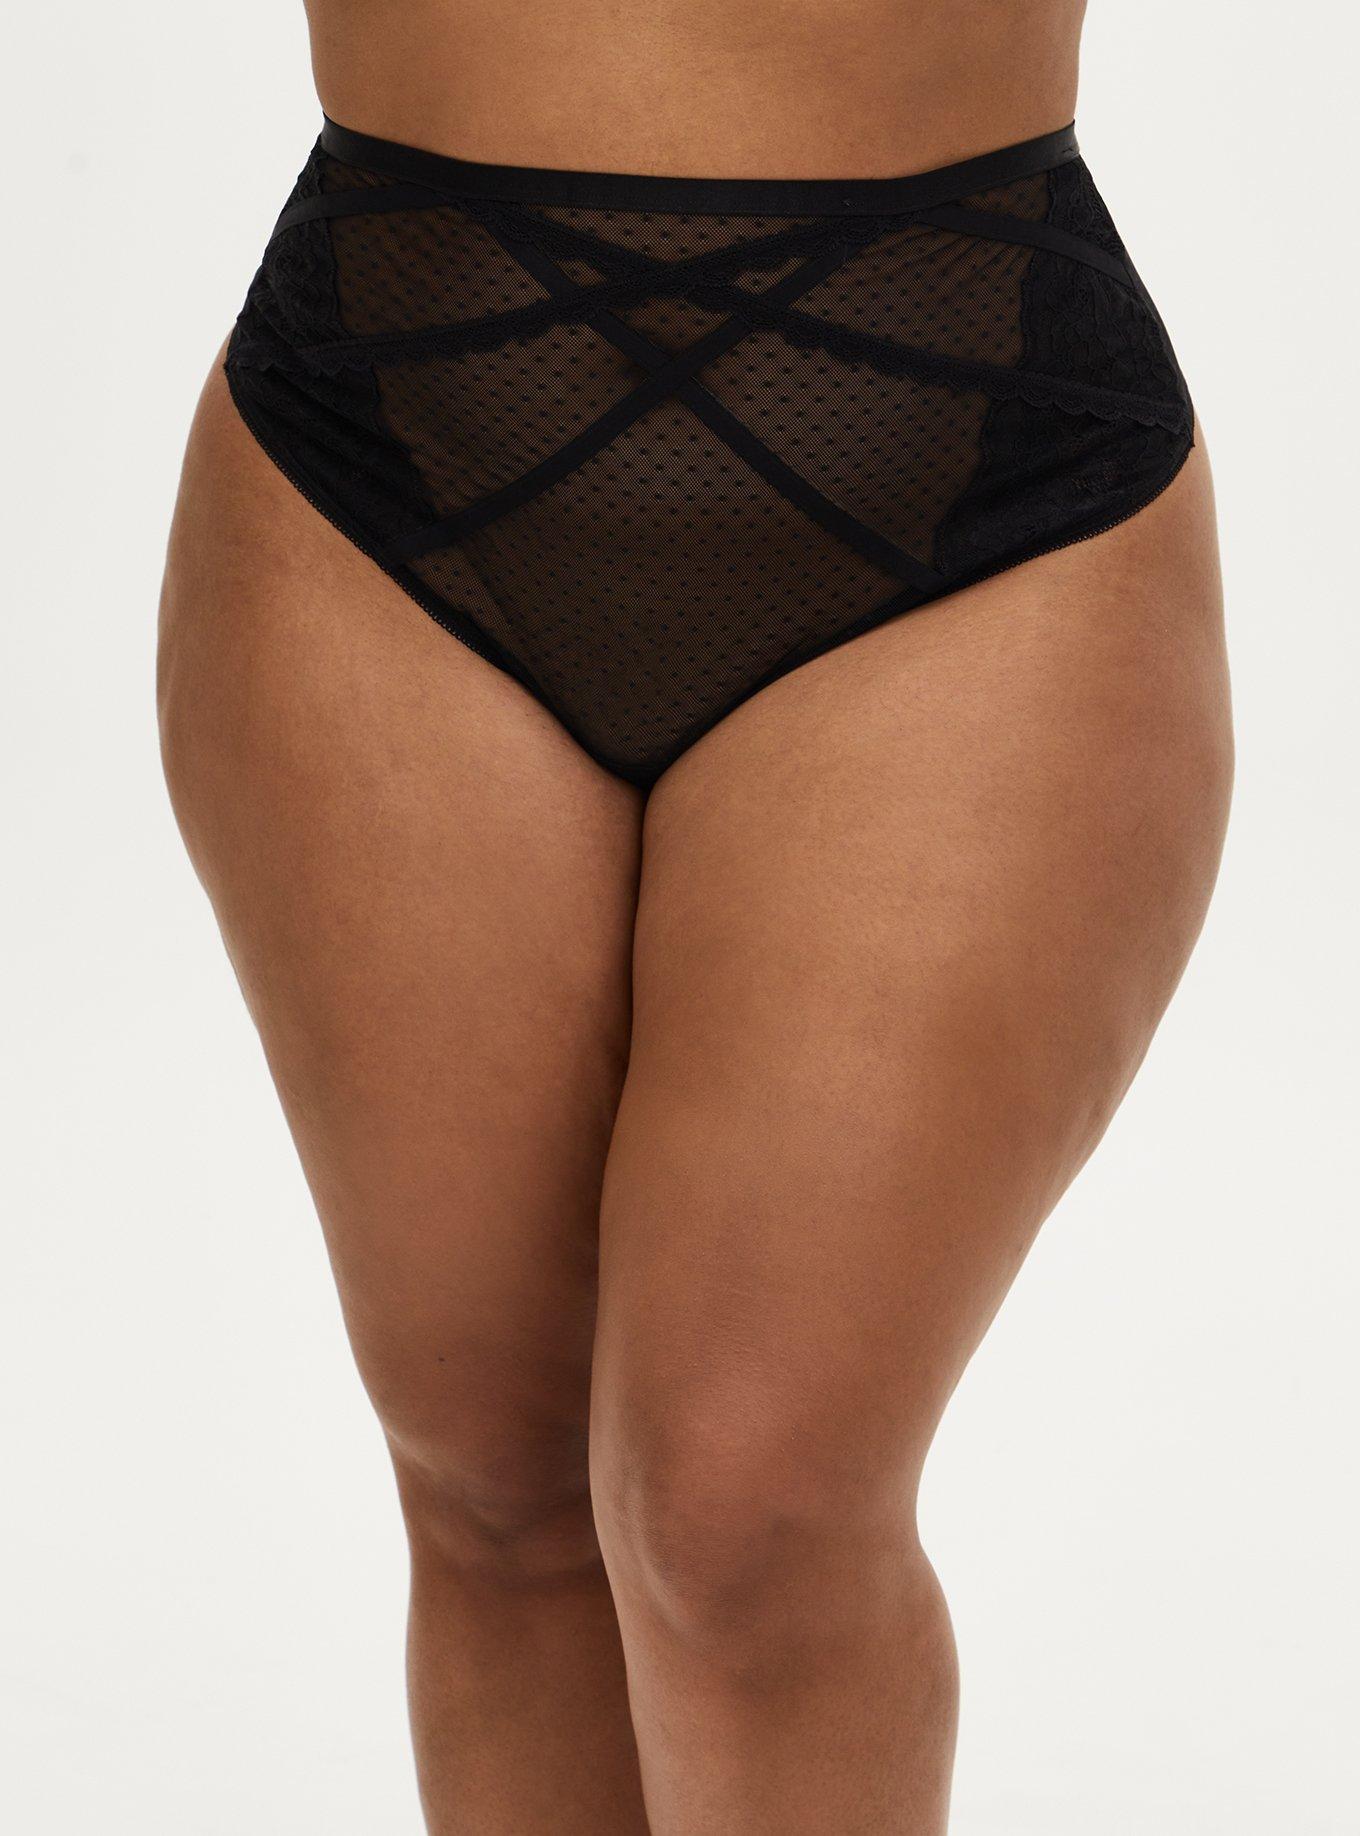 Torrid Black High Waist Cutout Back Lace Thong Panty Plus Size 2X